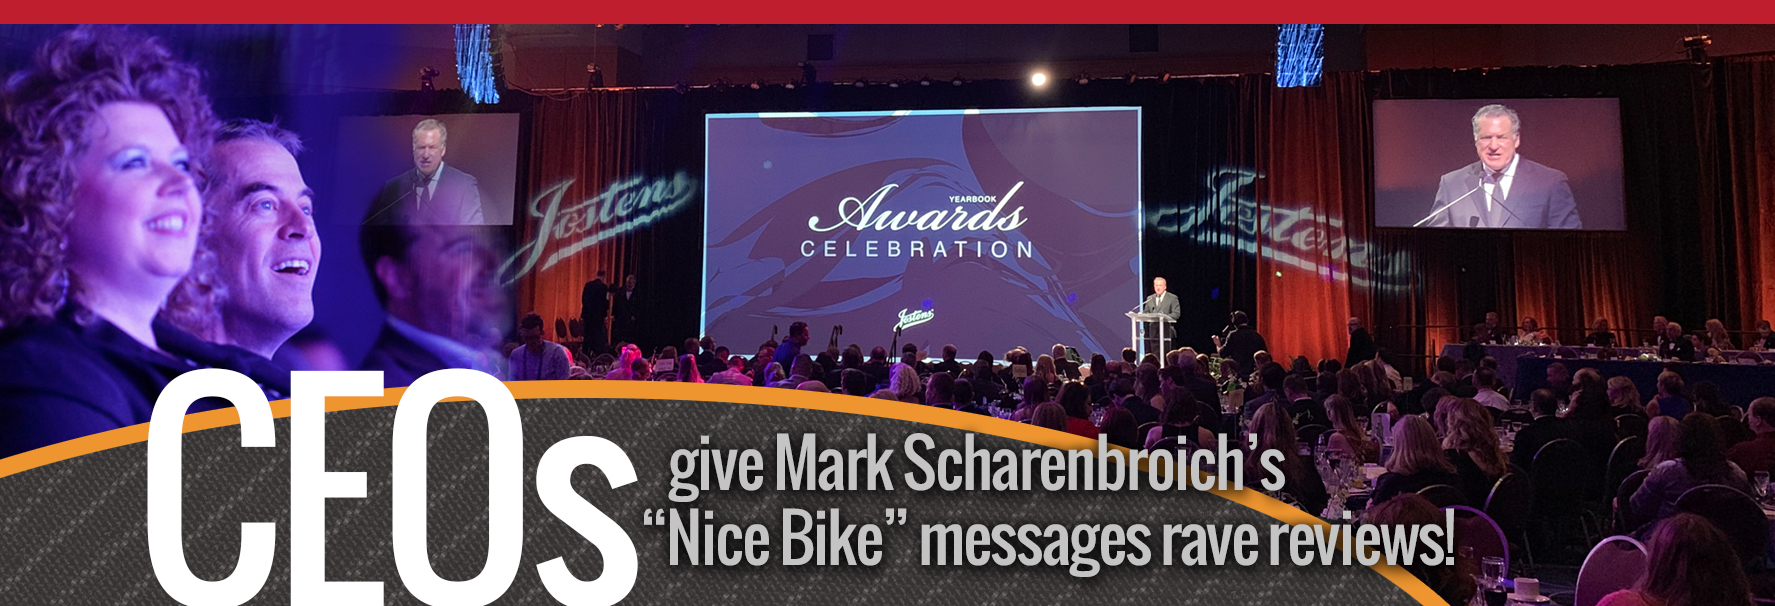 CEOs give Mark Scharenbroich's Nice Bike message rave reviews!